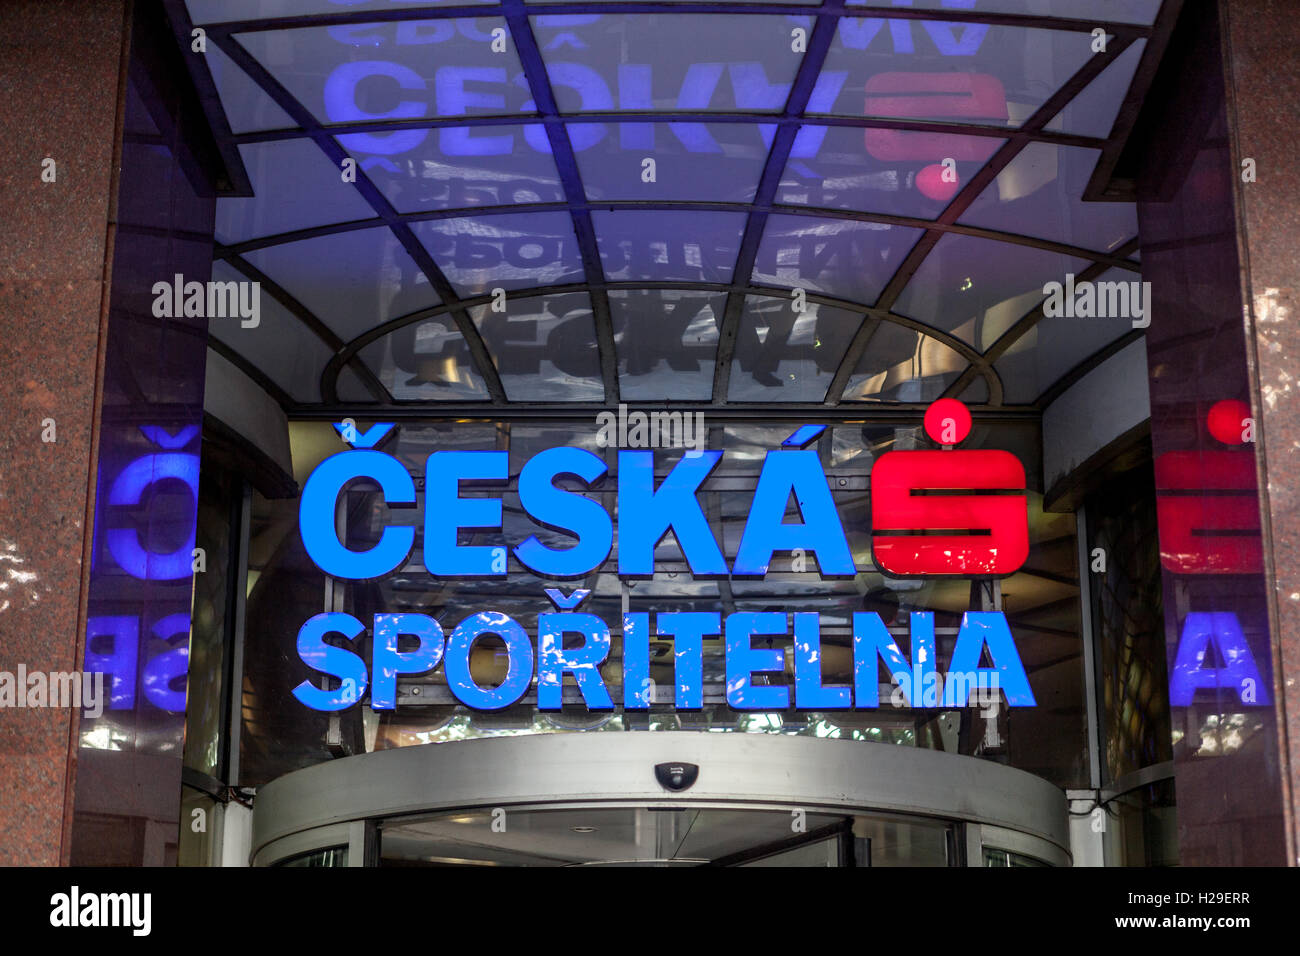 Ceska sporitelna sign logo Stock Photo